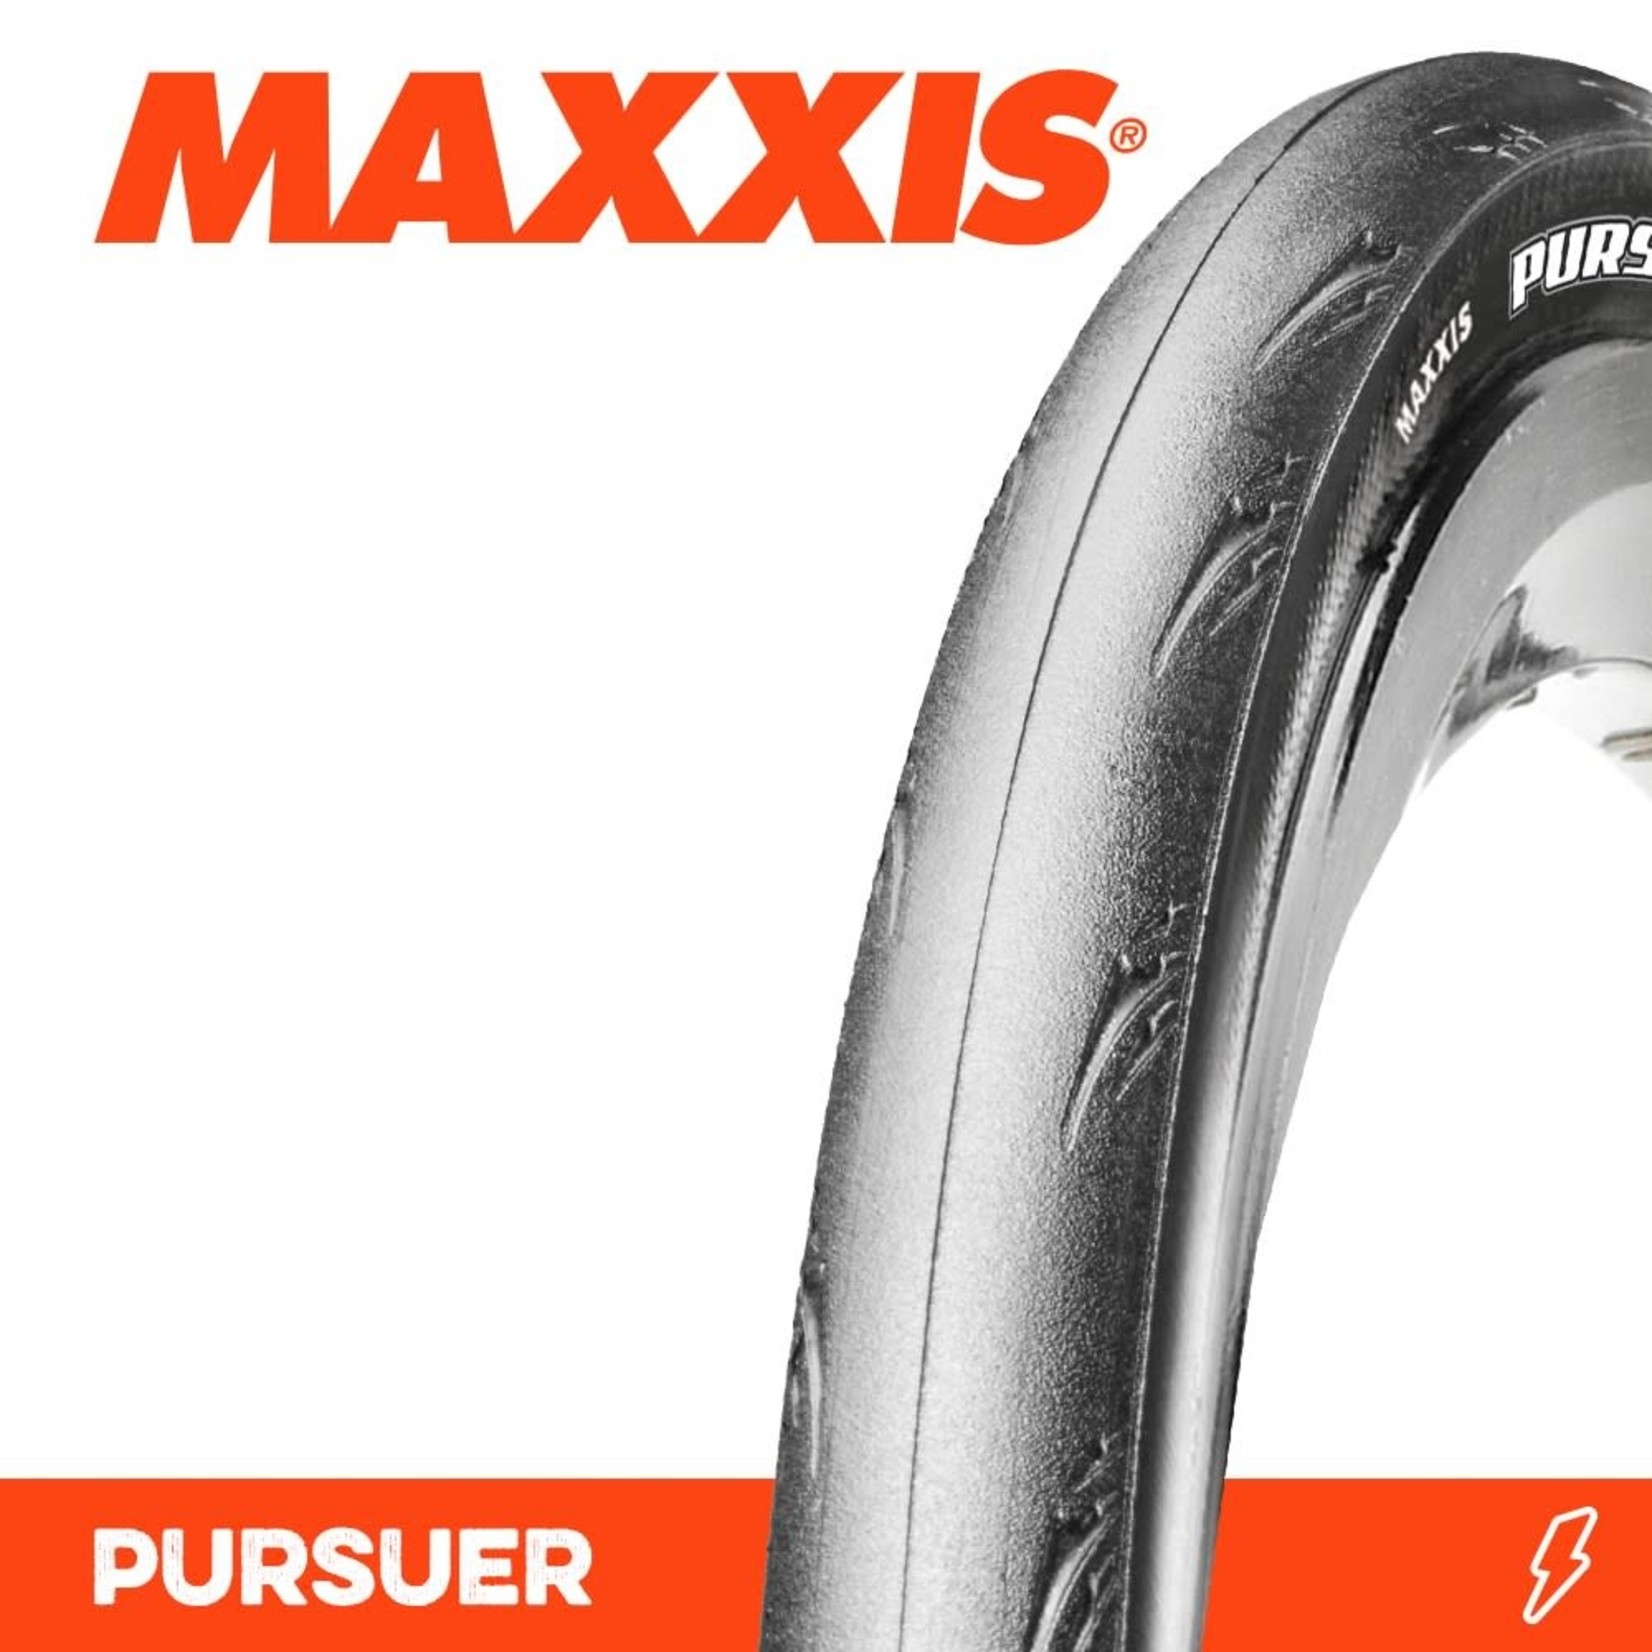 Maxxis Maxxis Pursuer Road 700x23c 60TPI